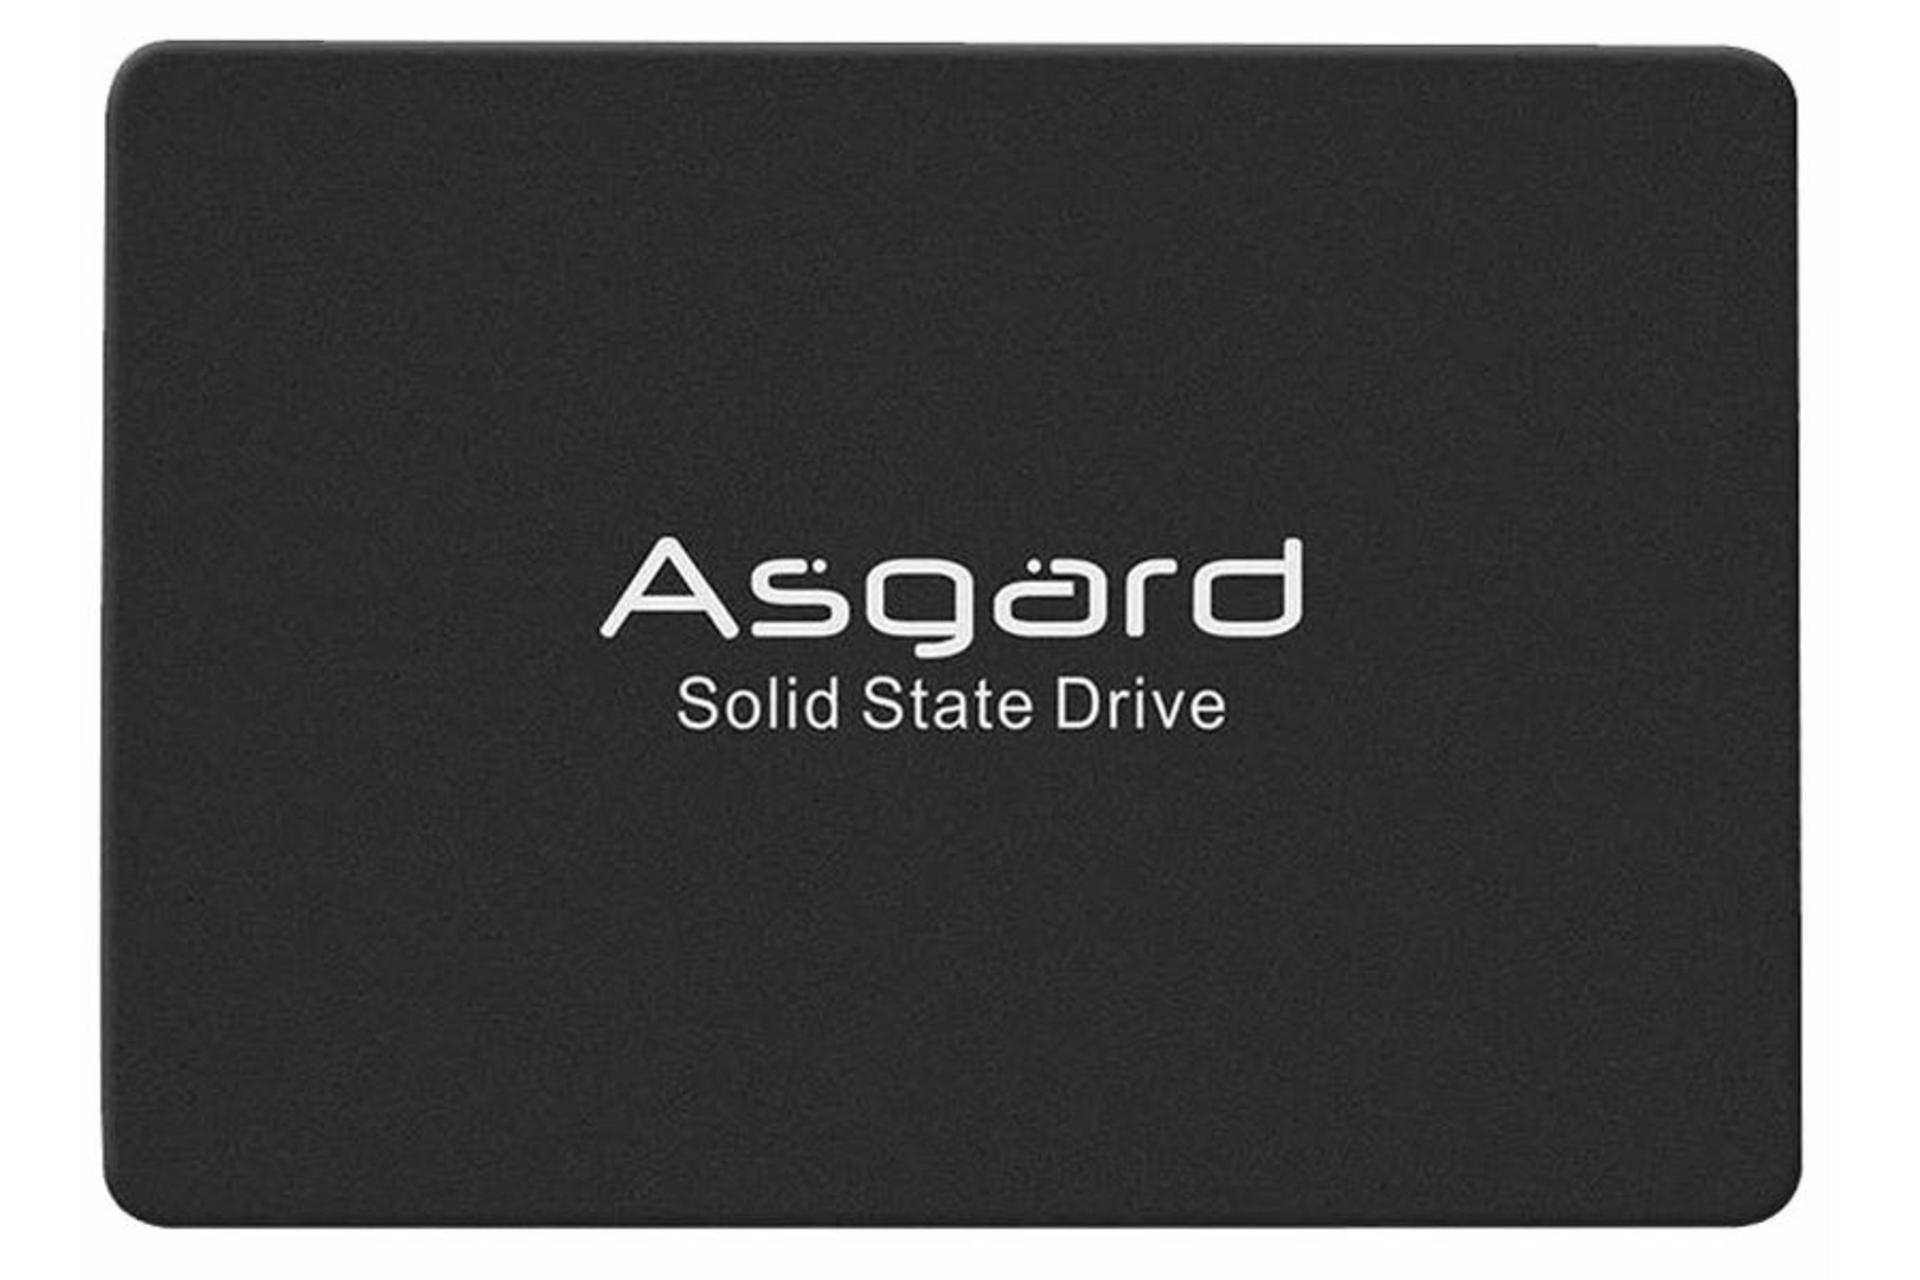 SSD ازگارد AS4TS3-S7 SATA 2.5 Inch